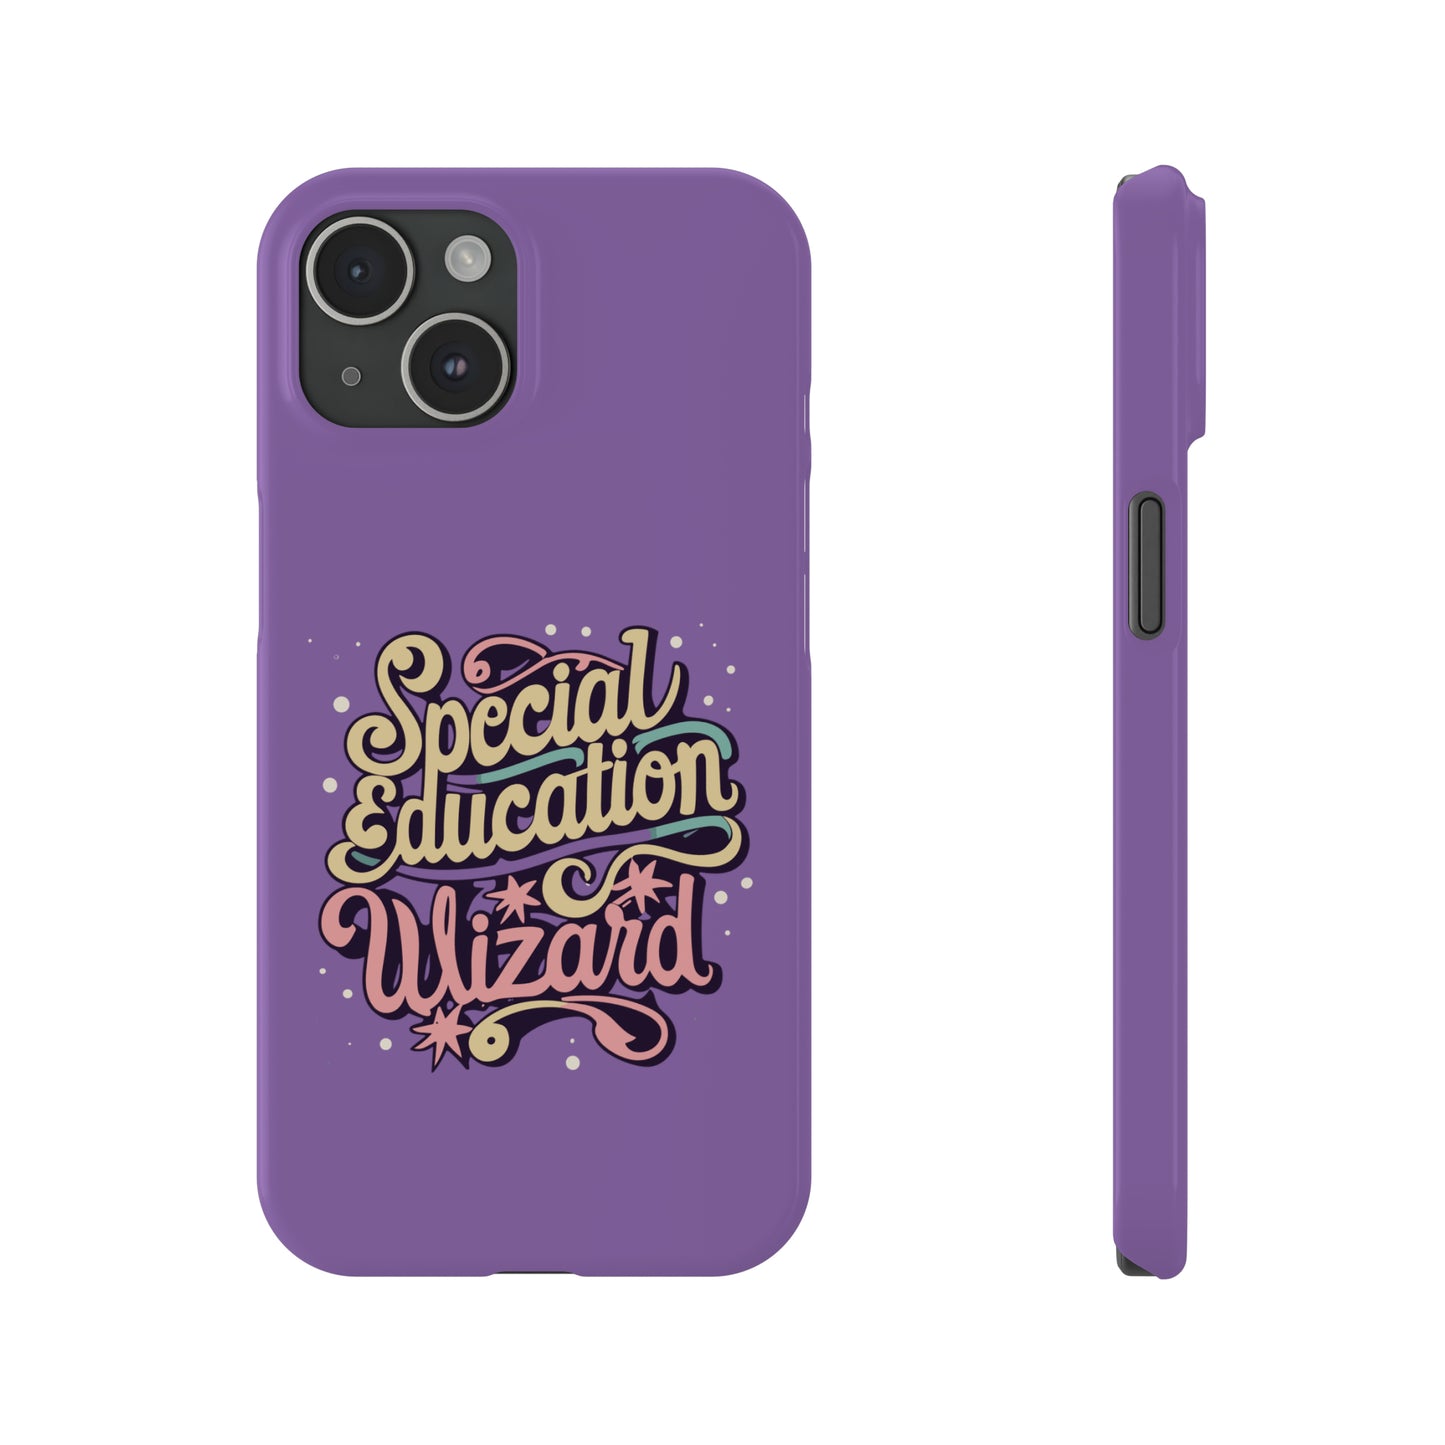 Special Ed Teacher Slim Phone Case - "Special Education Wizard"